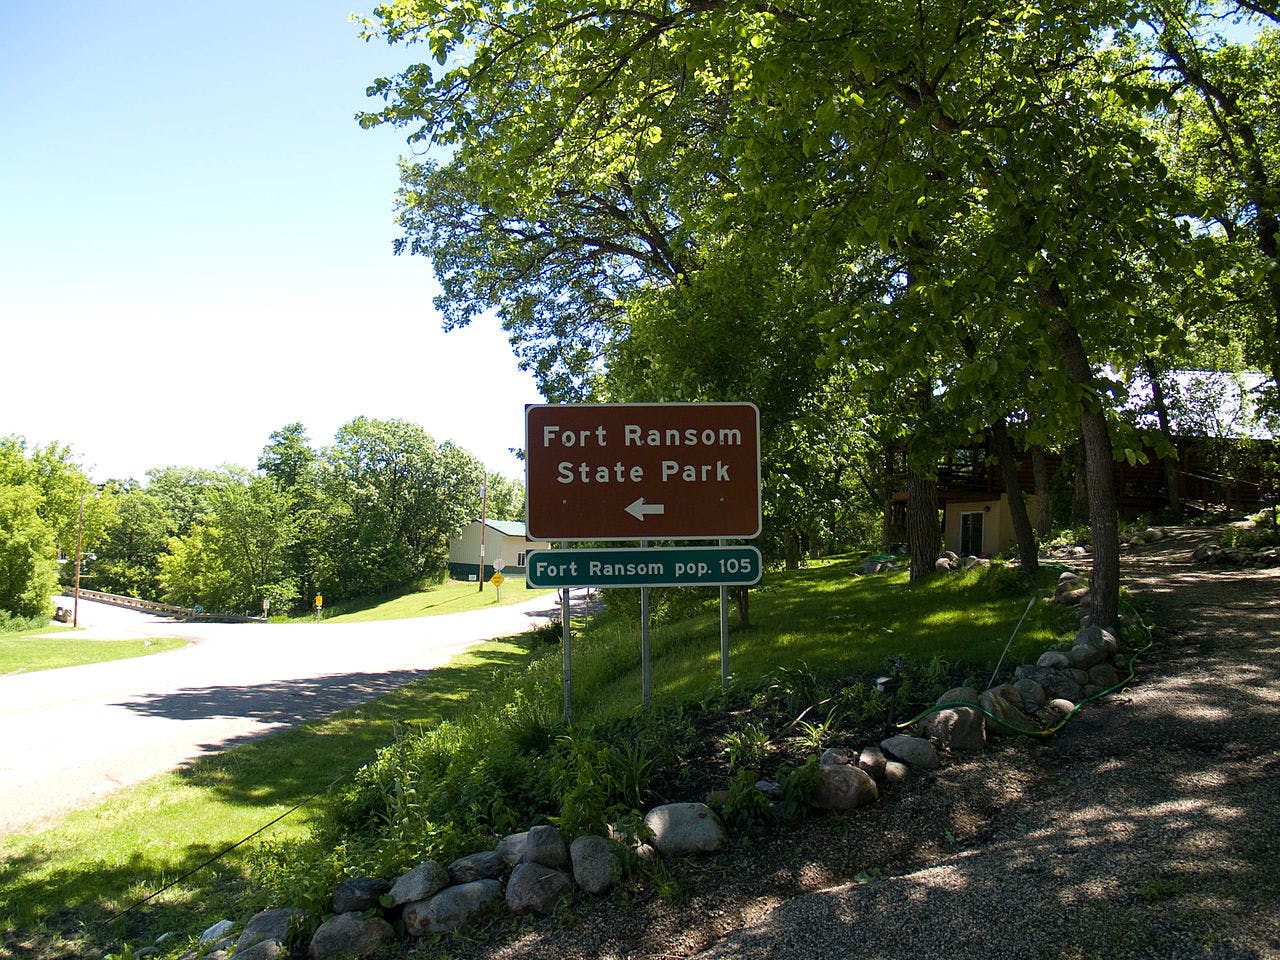 Fort Ransom State Park